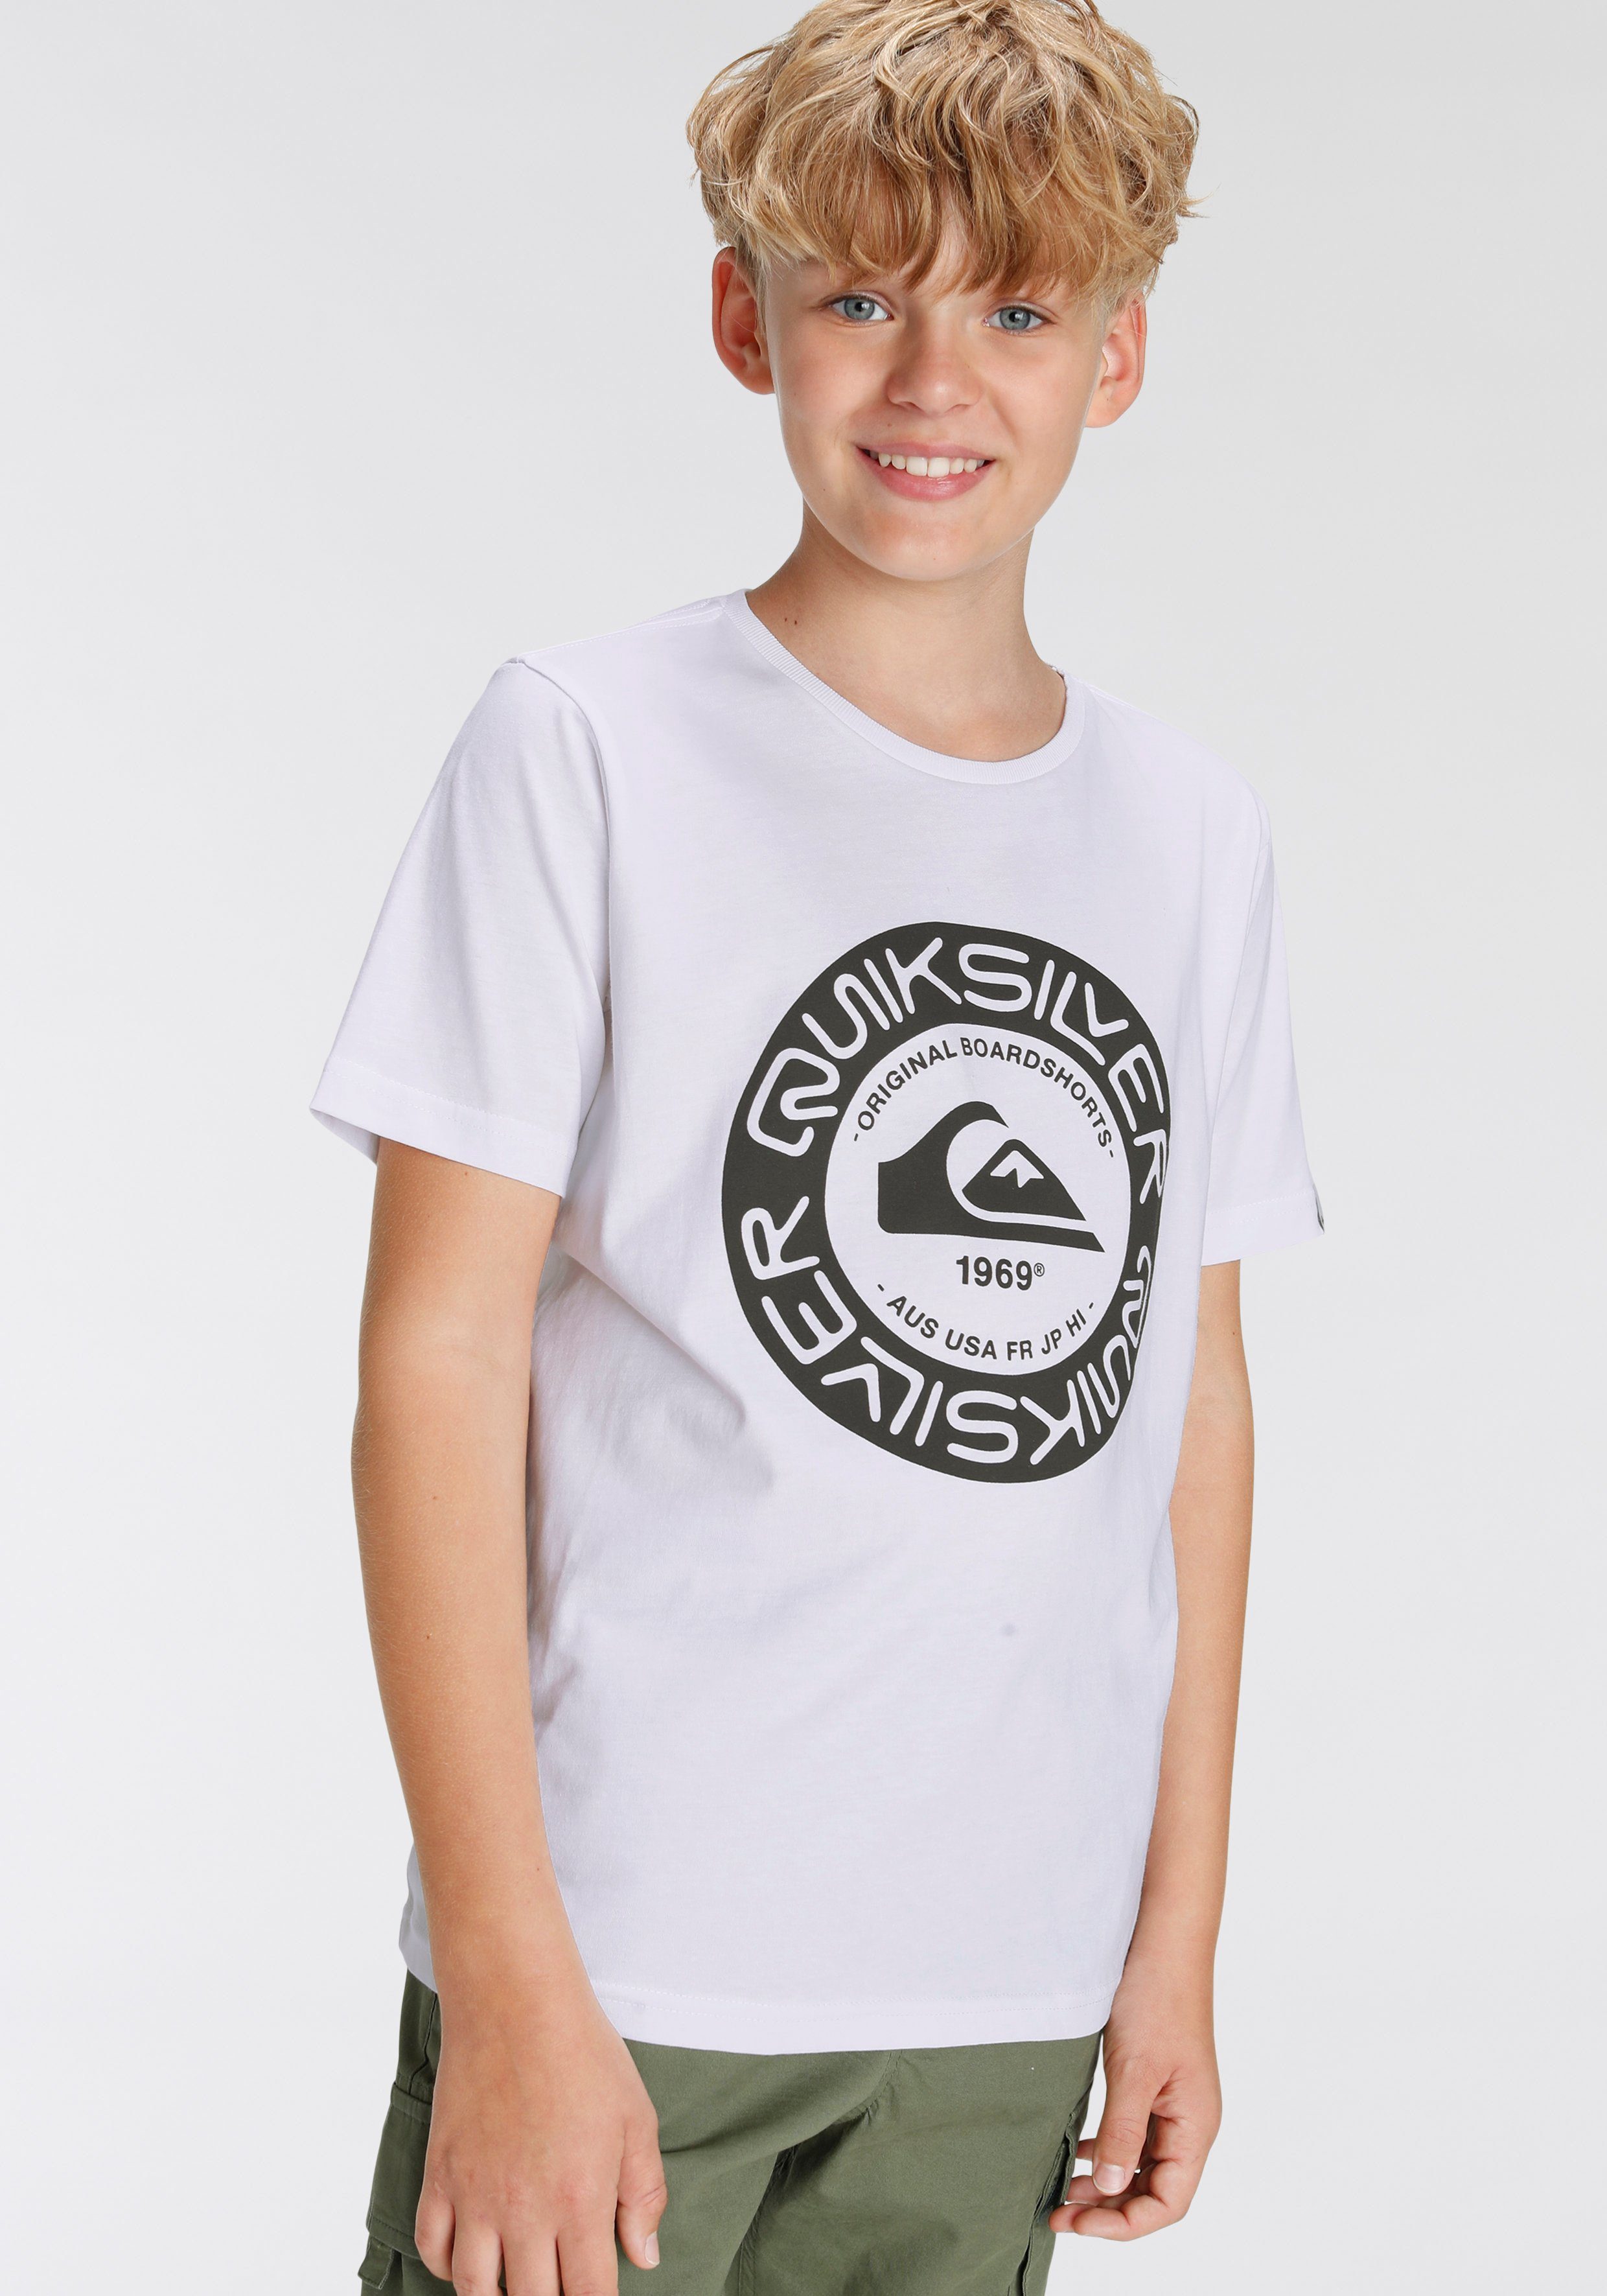 Quiksilver (Packung, 2-tlg) Doppelpack T-Shirt Logodruck Jungen mit